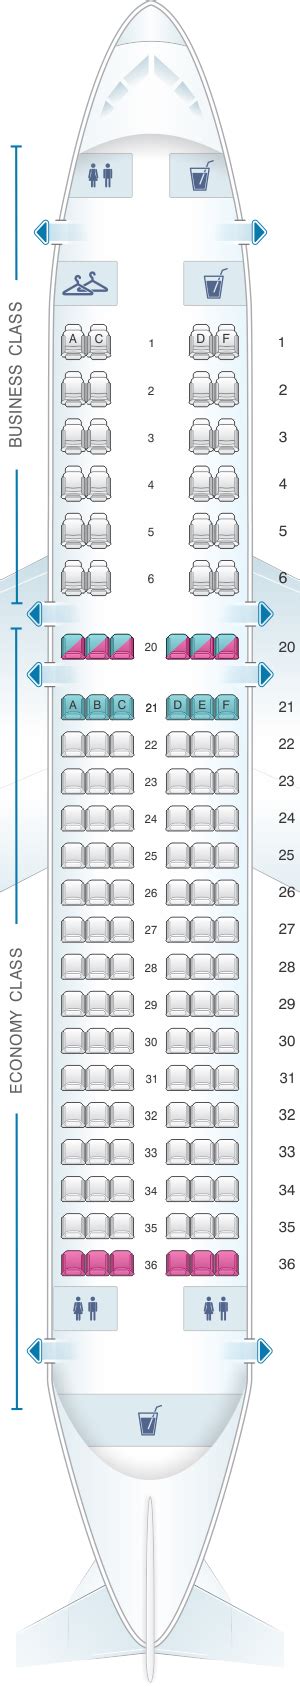 Seat Map Mea Airbus A320 200 Seatmaestro